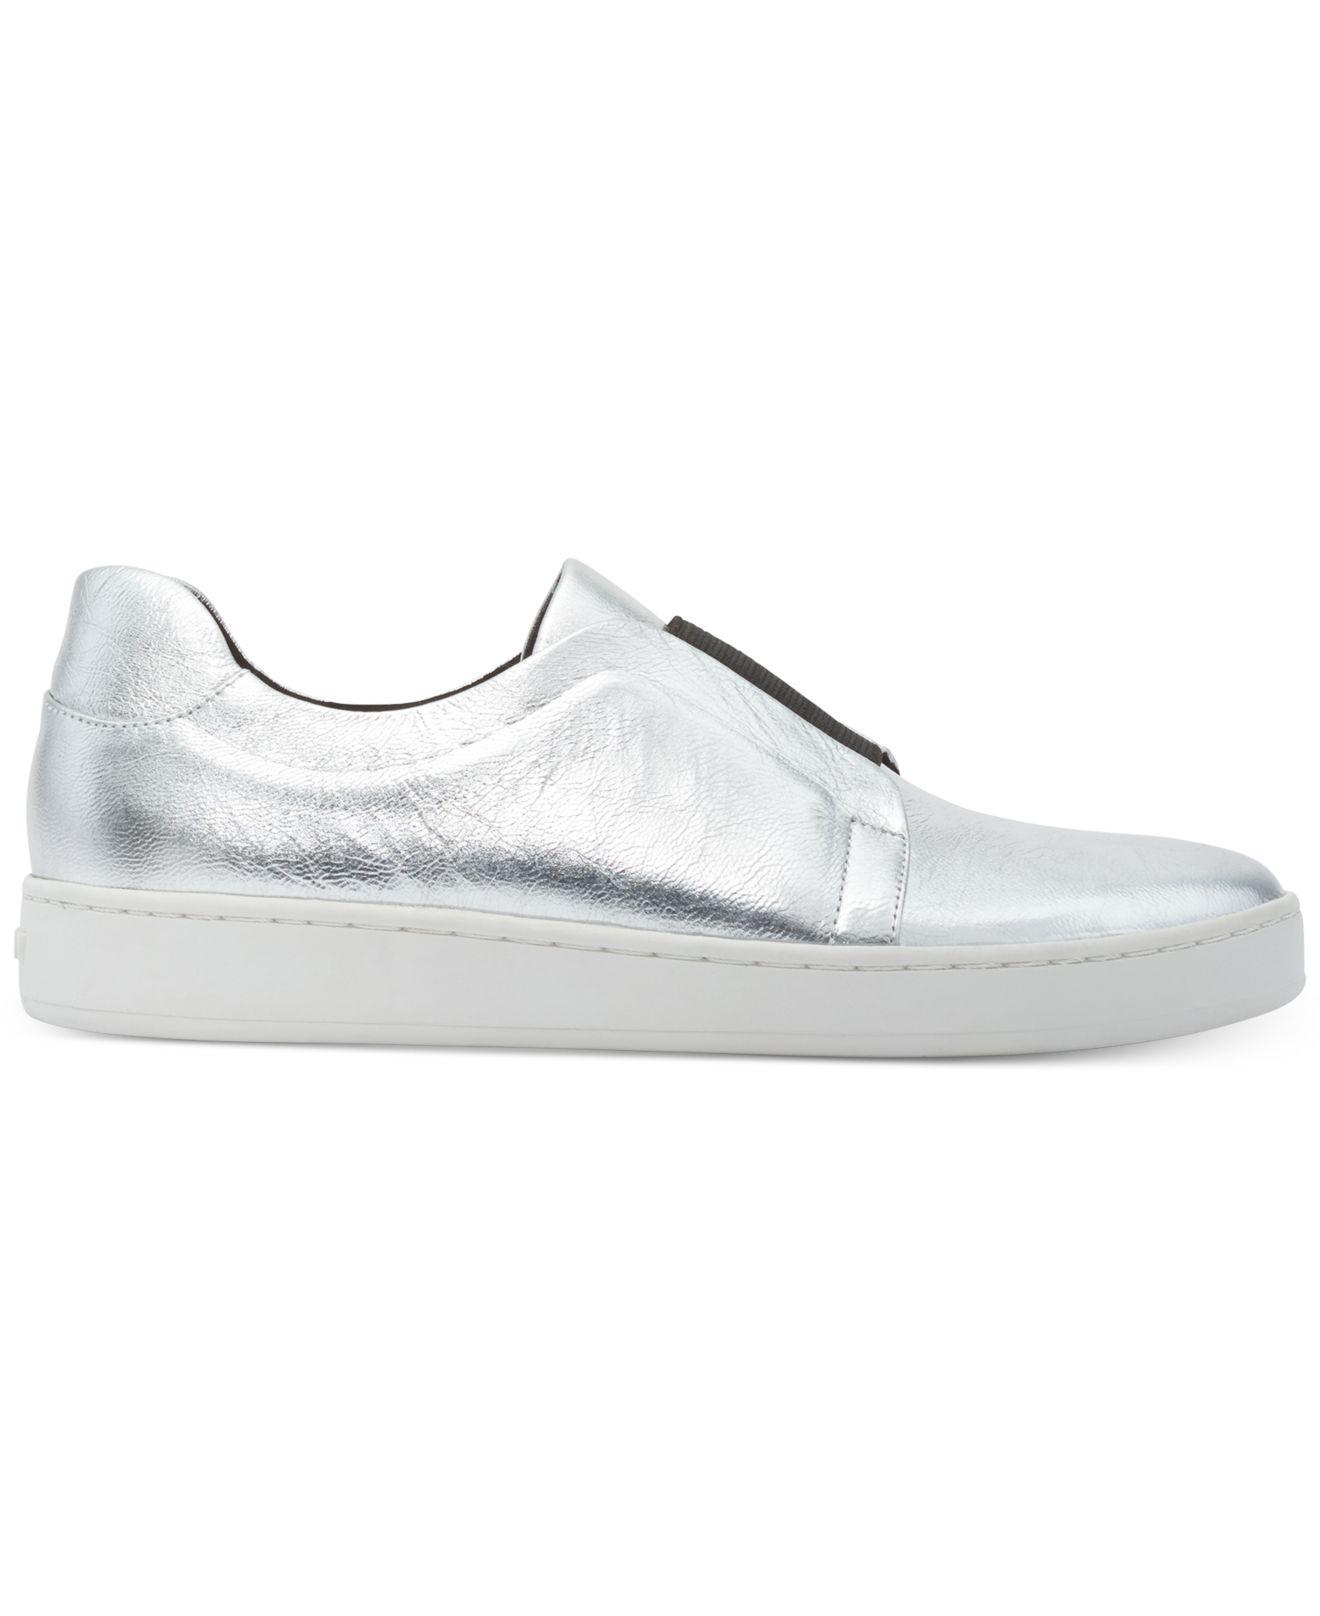 DKNY Denim Bobbi Slip-on Shoes in Silver (Metallic) - Lyst